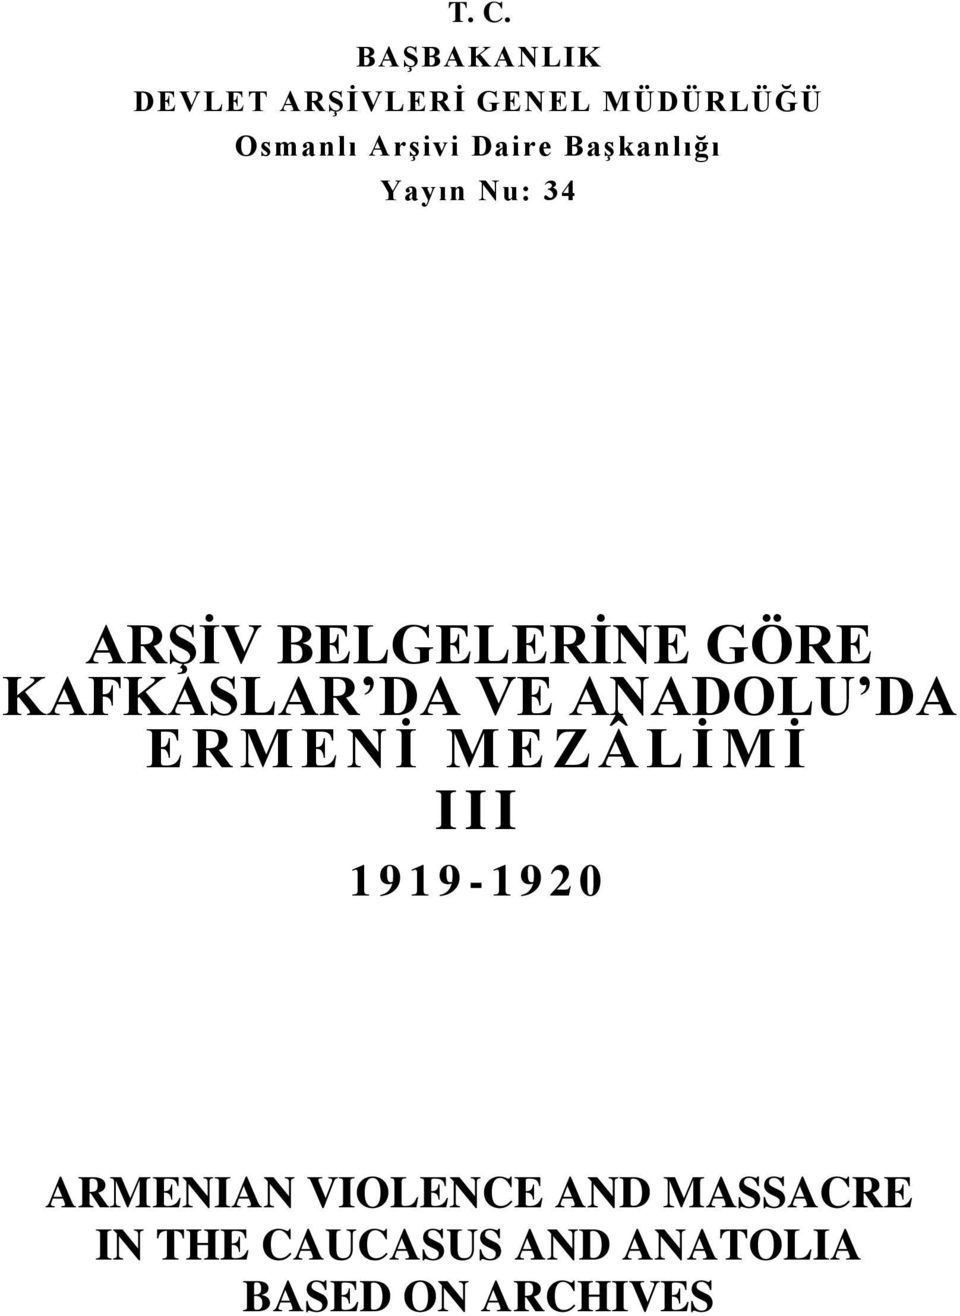 KAFKASLAR DA VE ANADOLU DA E RMENĠ M E ZÂL Ġ MĠ III 1919-1920